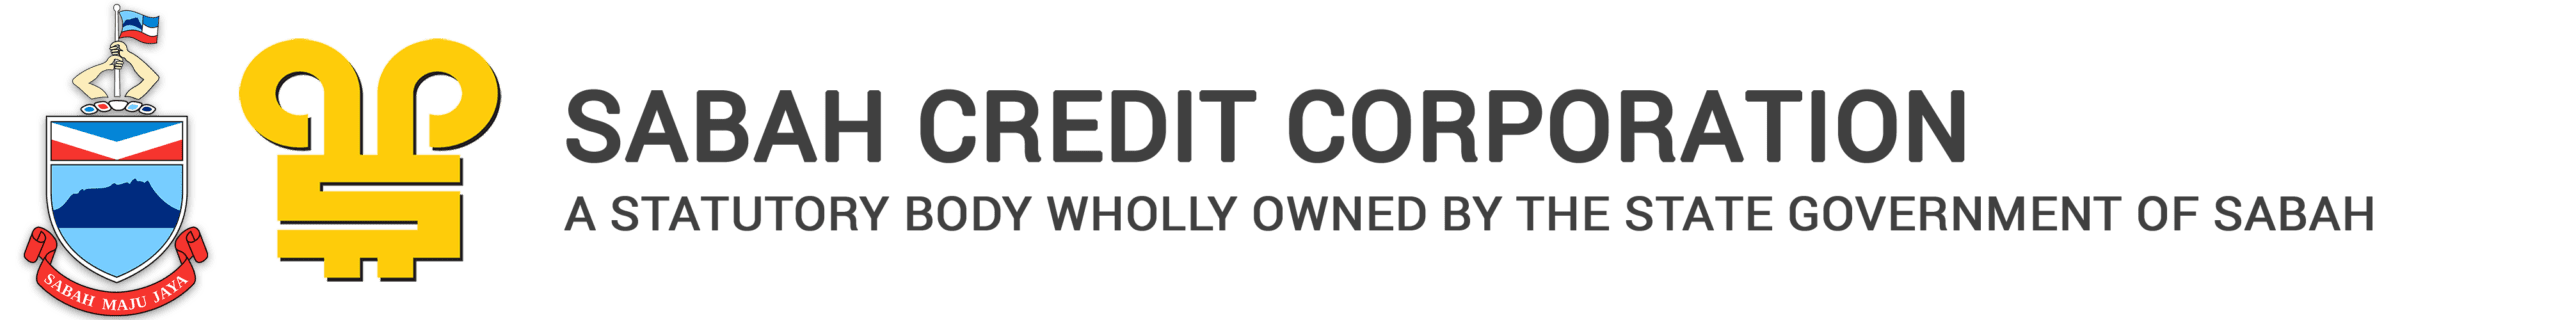 sabah credit corporation logo